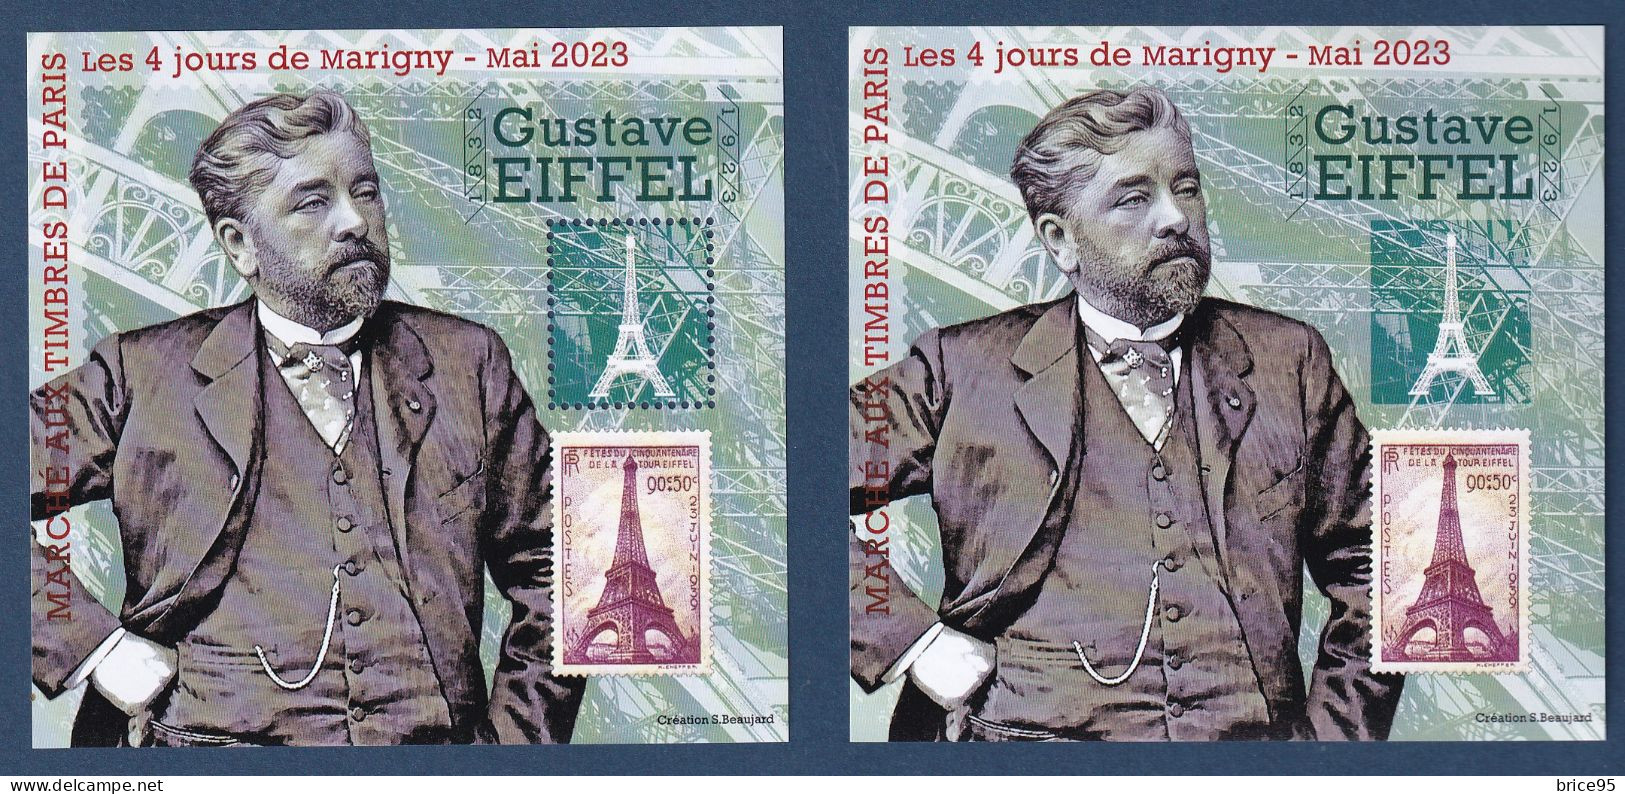 France - Bloc Marigny - Gustave Eiffel - 2023 - Foglietti Commemorativi